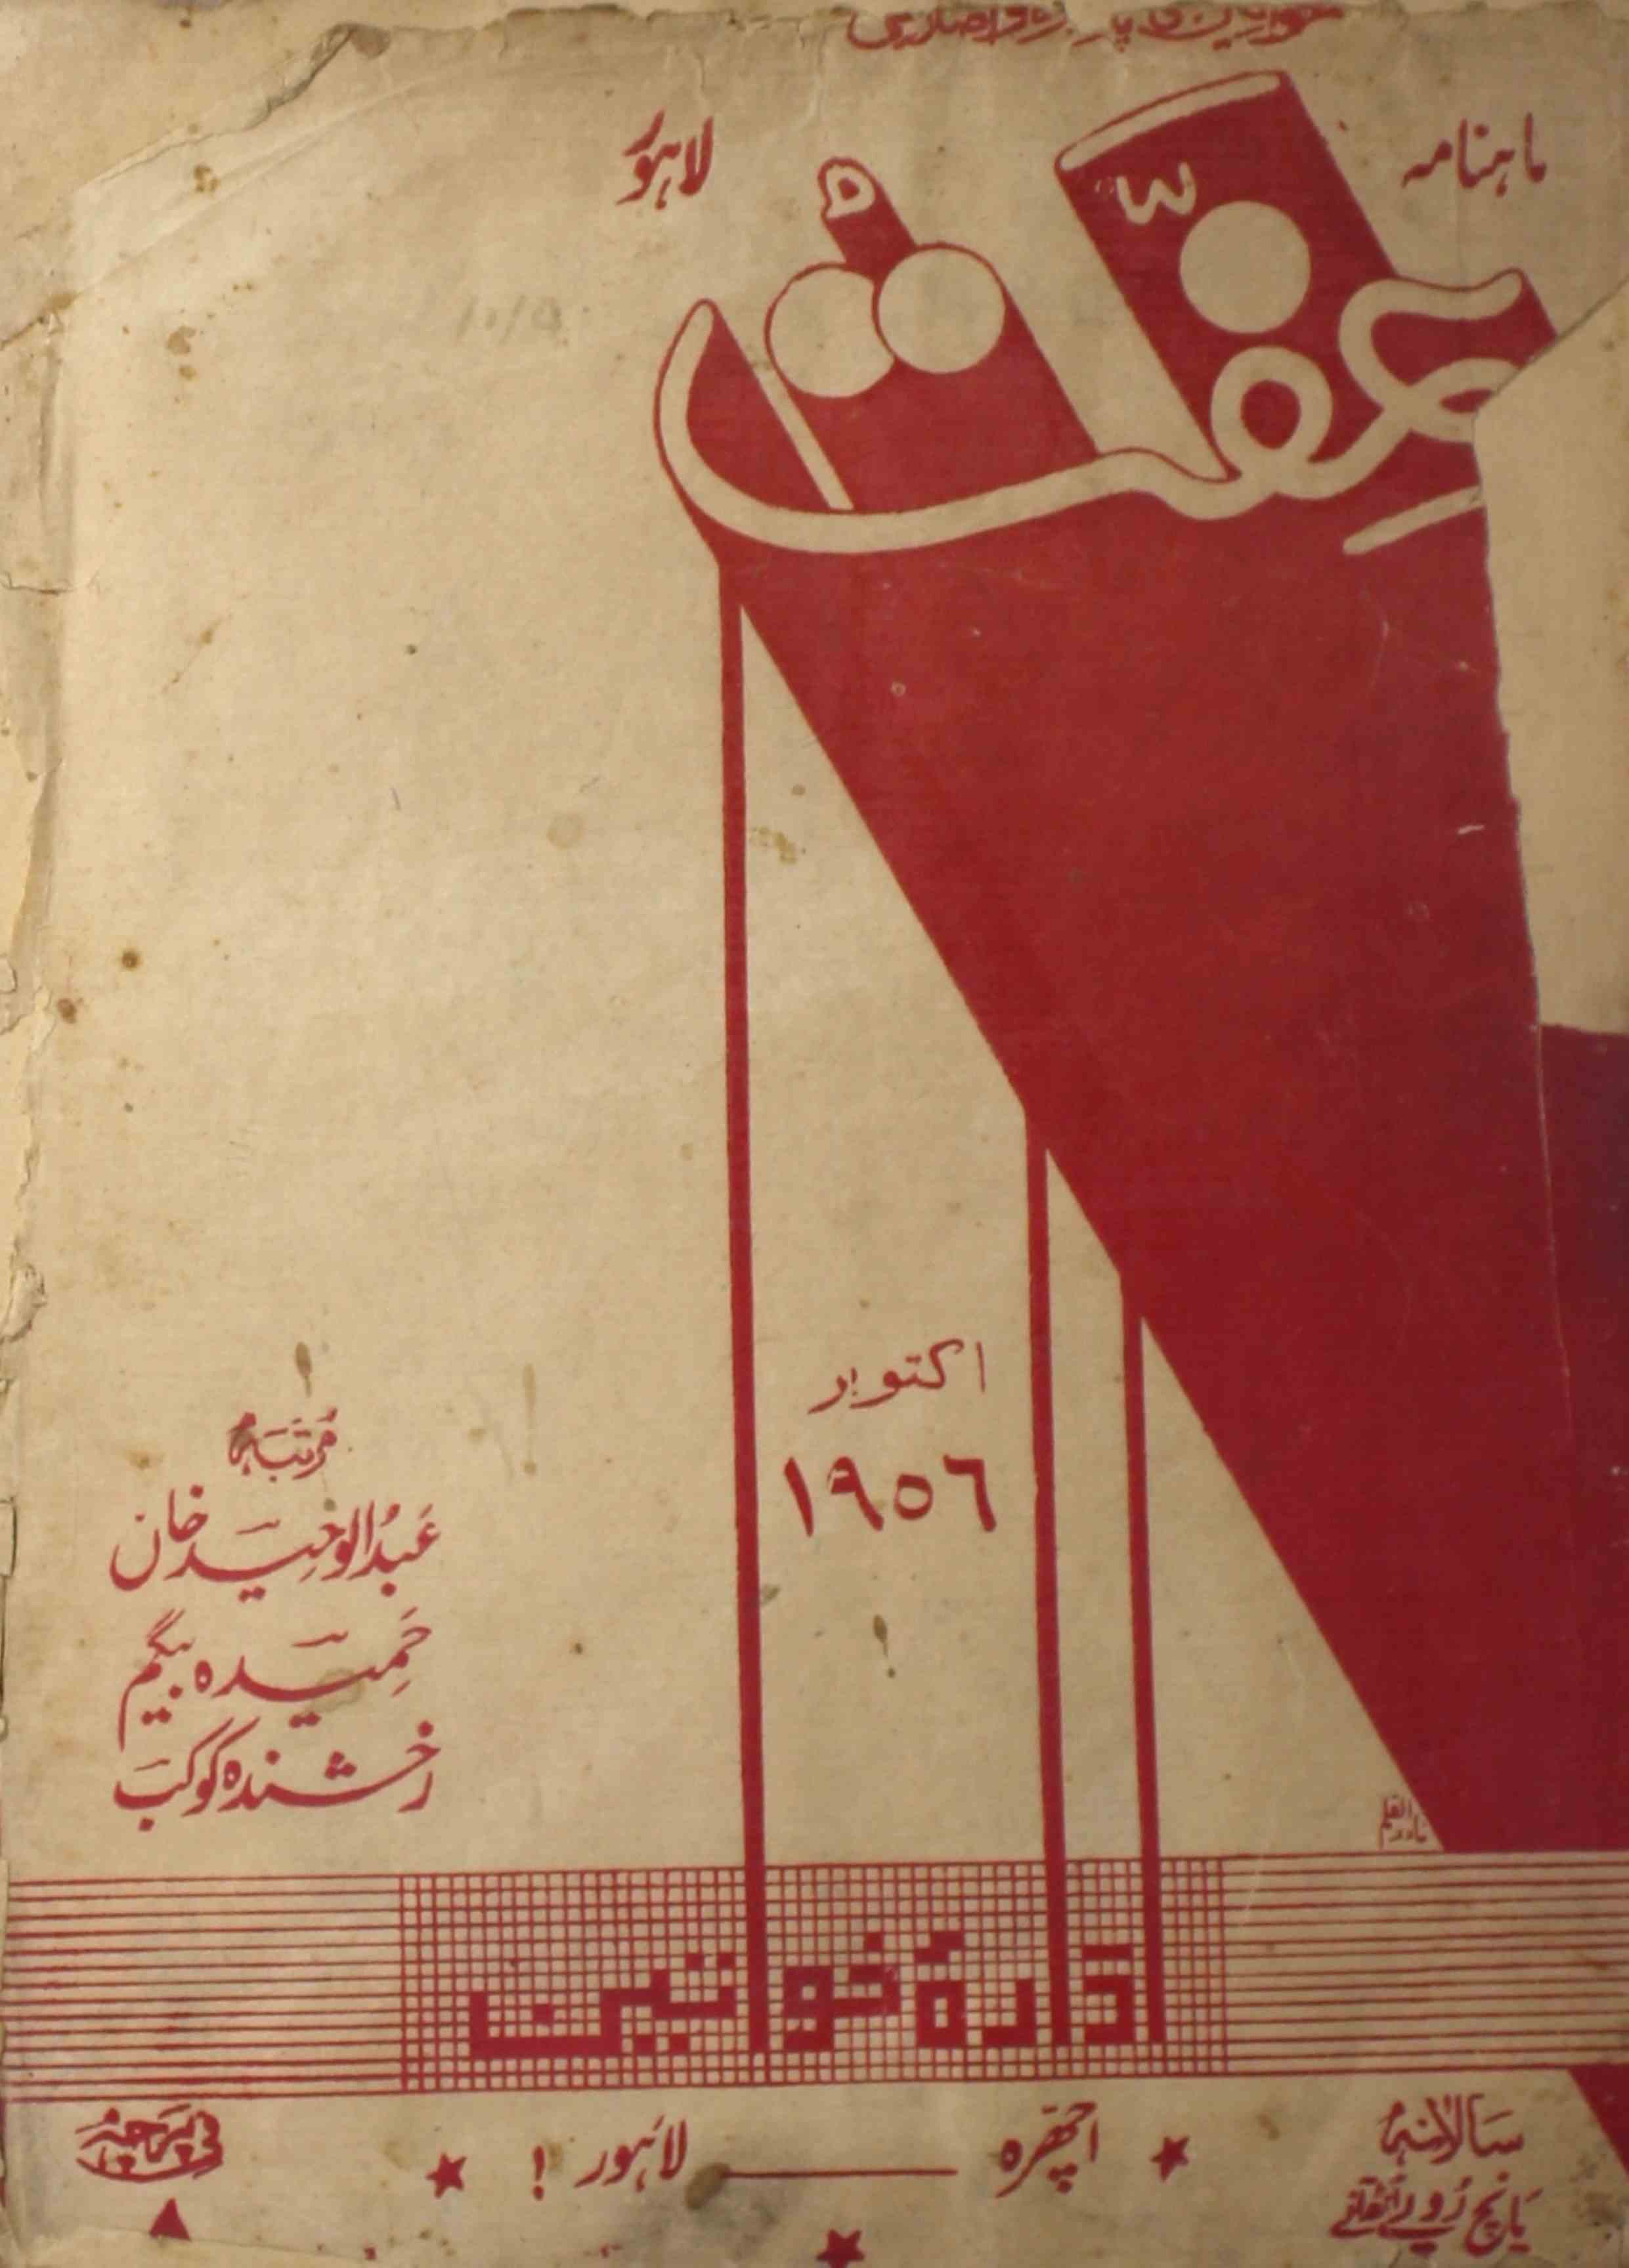 Afat Jild 3 Shumara 4 October 1956-Svk